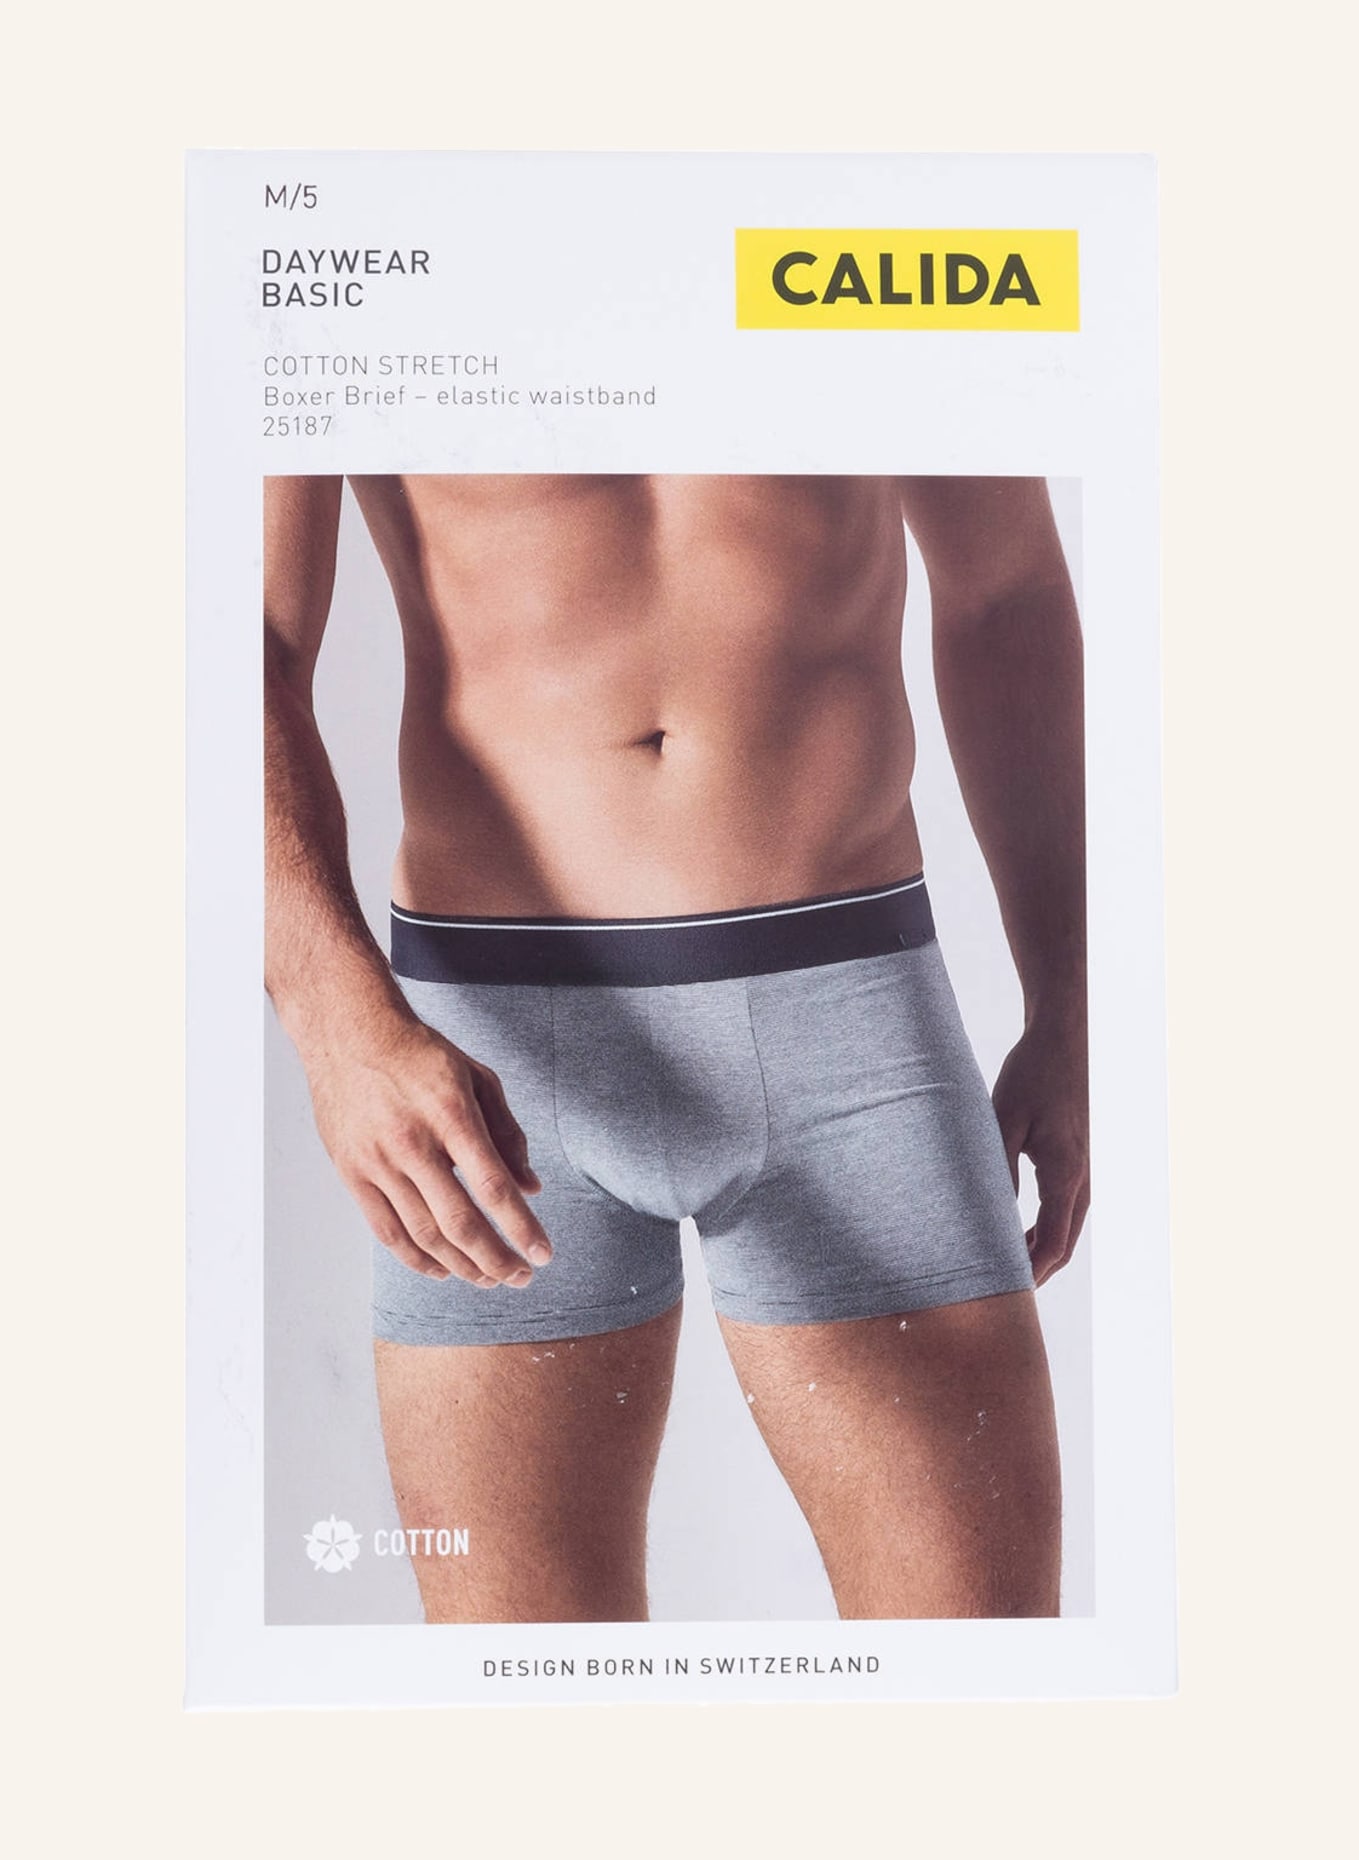 CALIDA Boxer shorts COTTON STRETCH in gray/dark blue striped